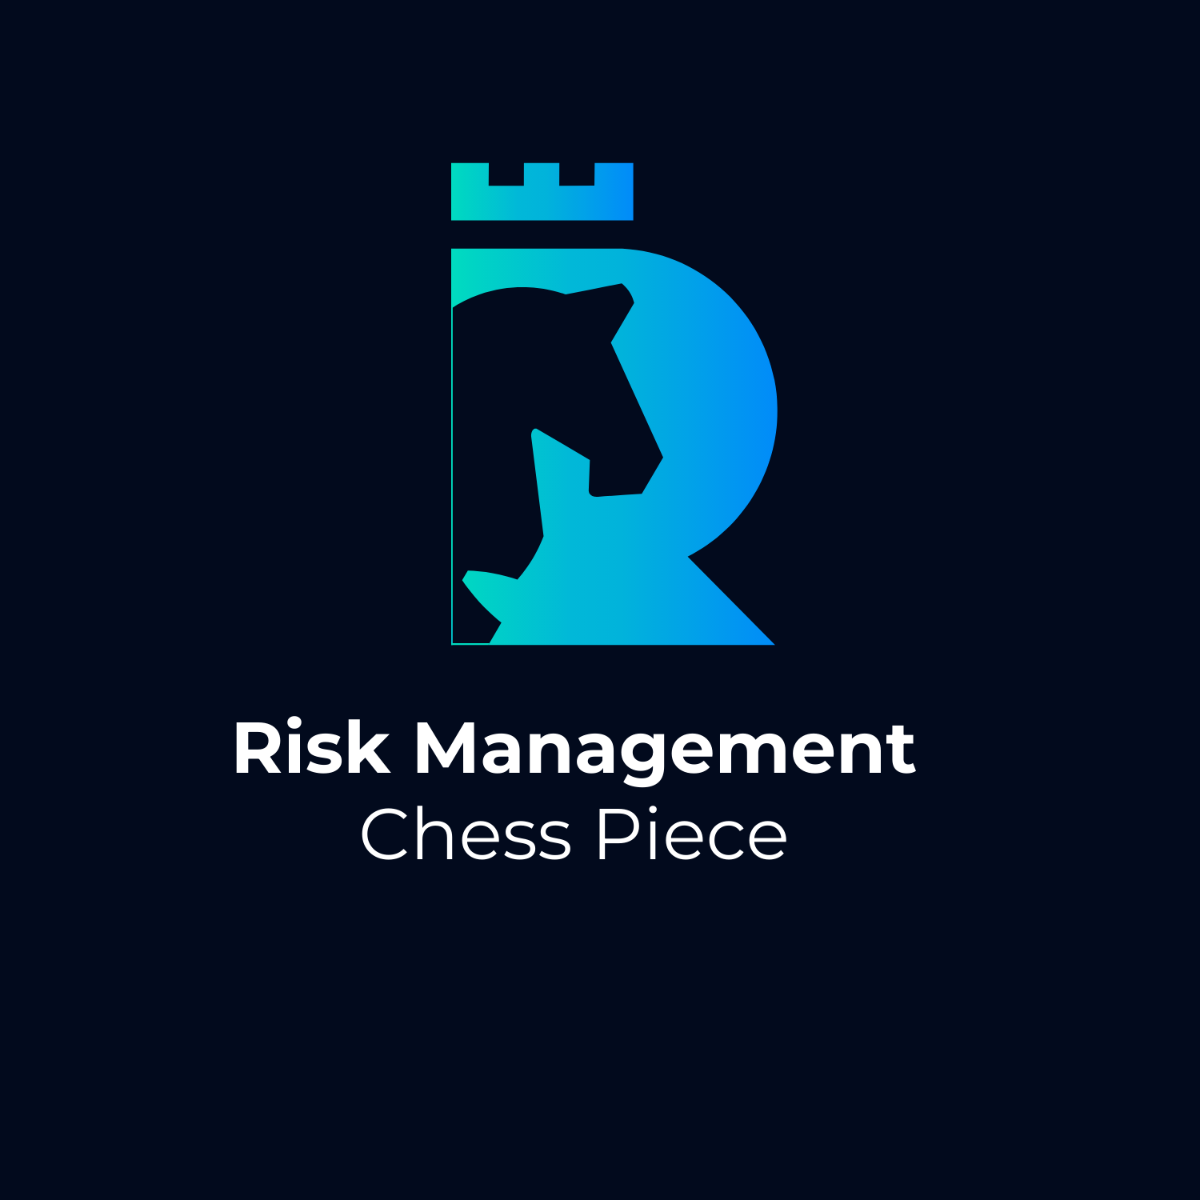 Risk Management Chess Piece Logo